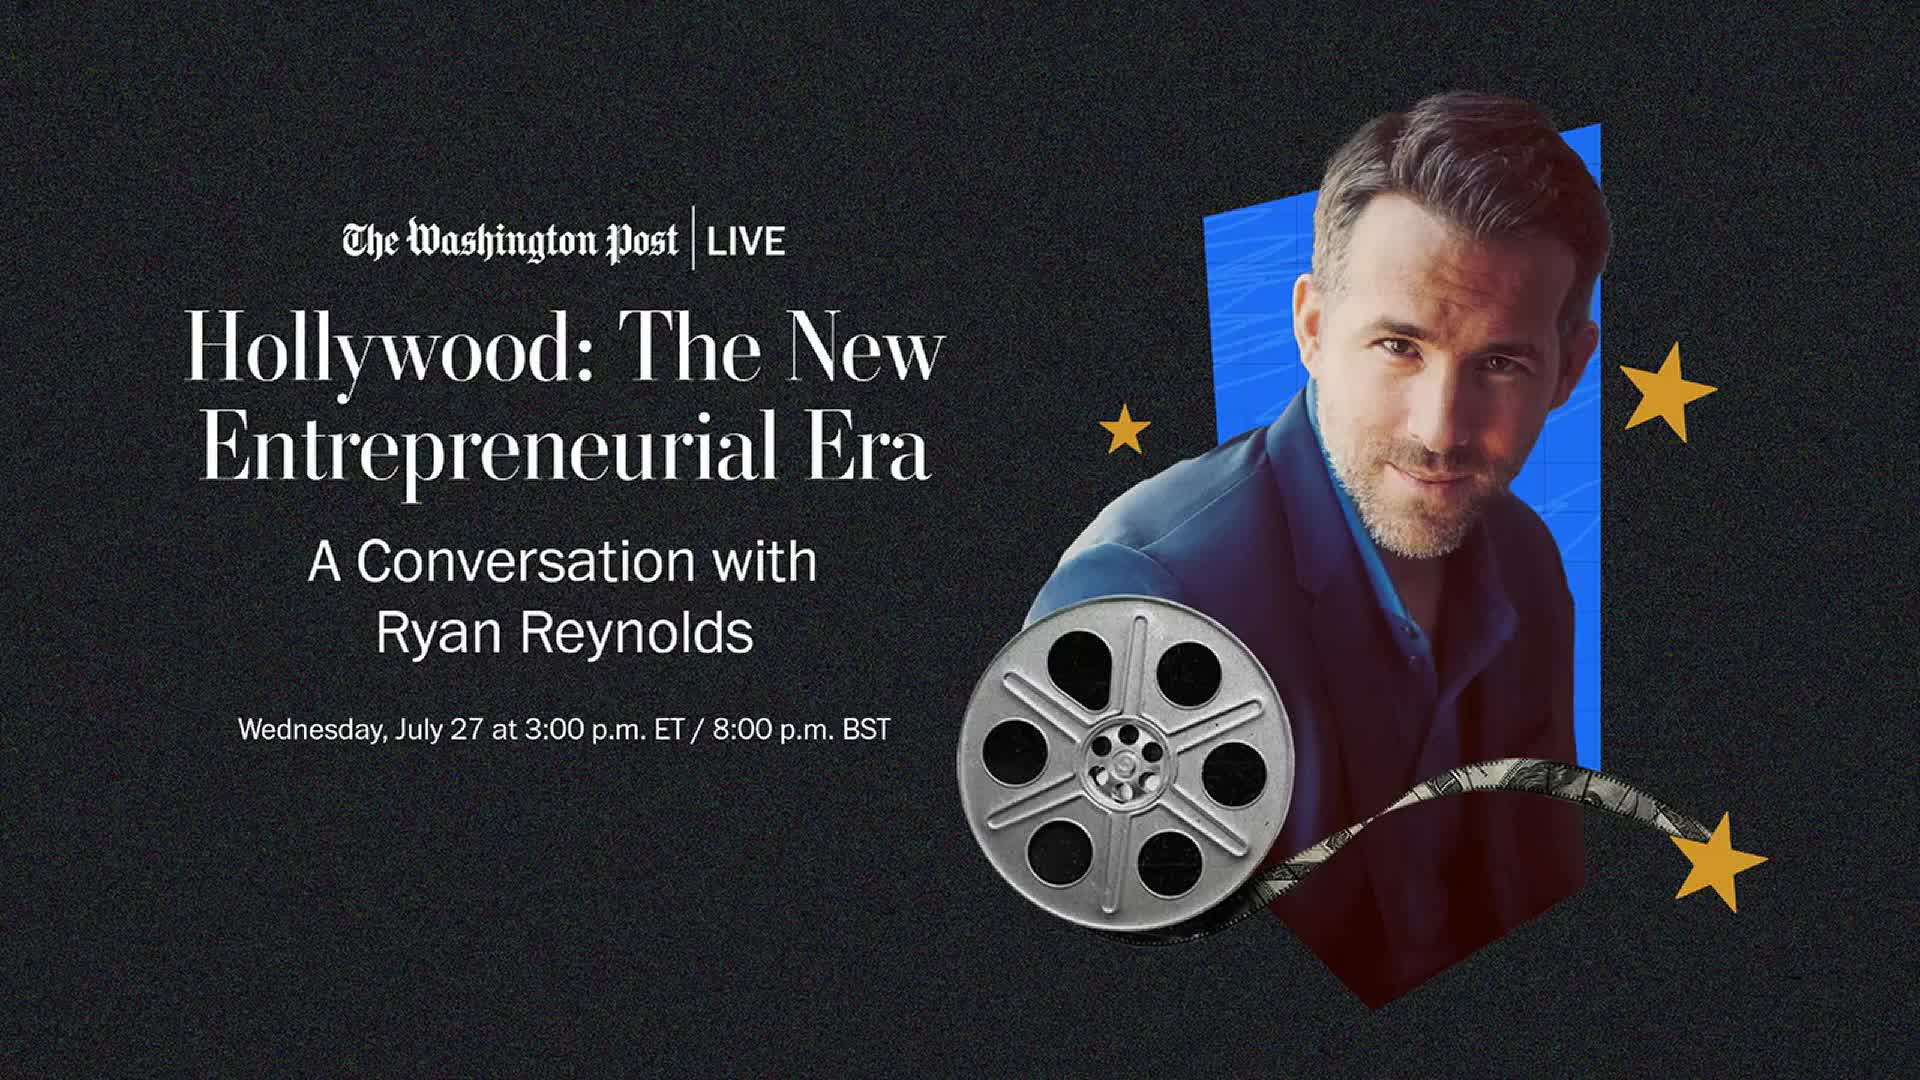 Ryan Reynolds - Variety500 - Top 500 Entertainment Business Leaders